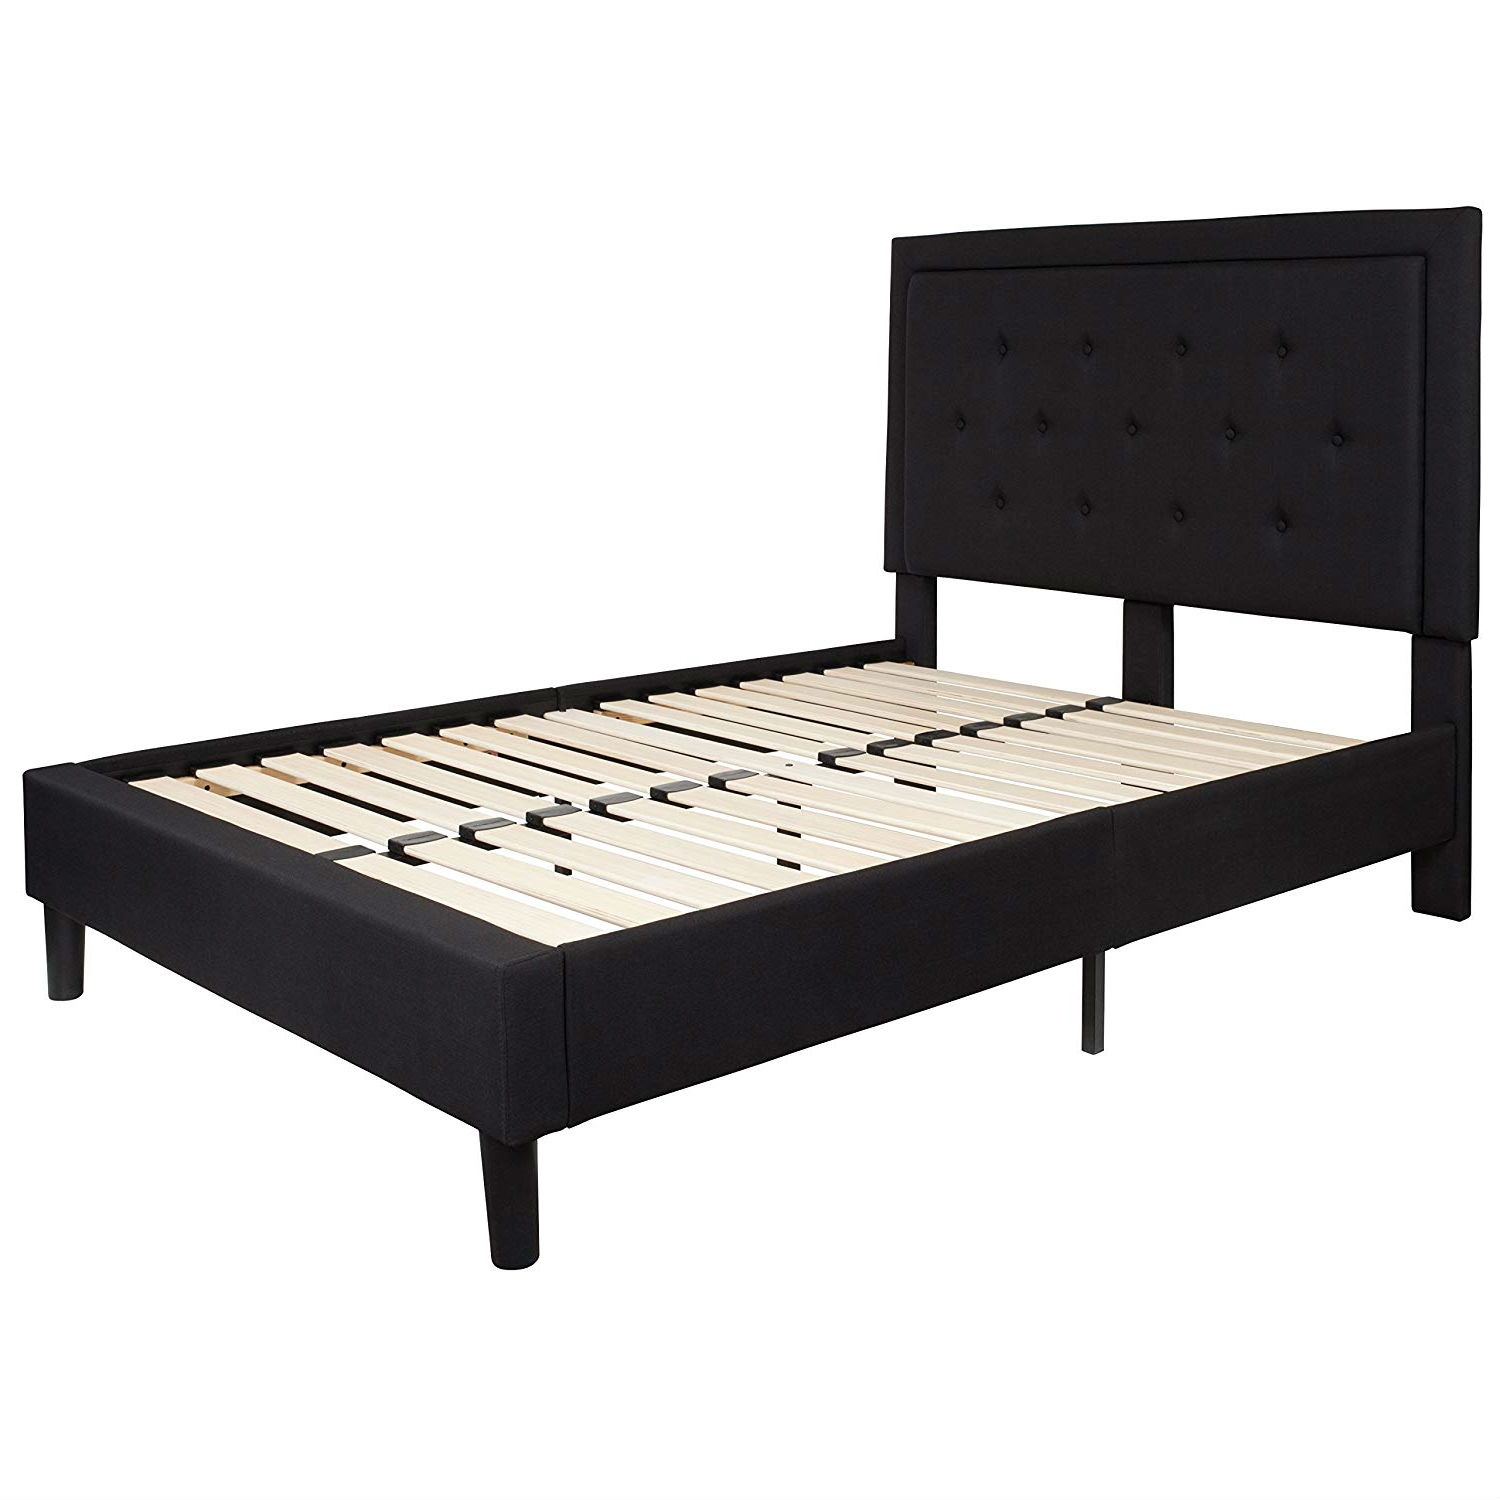 Full size Black Fabric Upholstered Platform Bed Frame with Headboard |  FastFurnishings.com